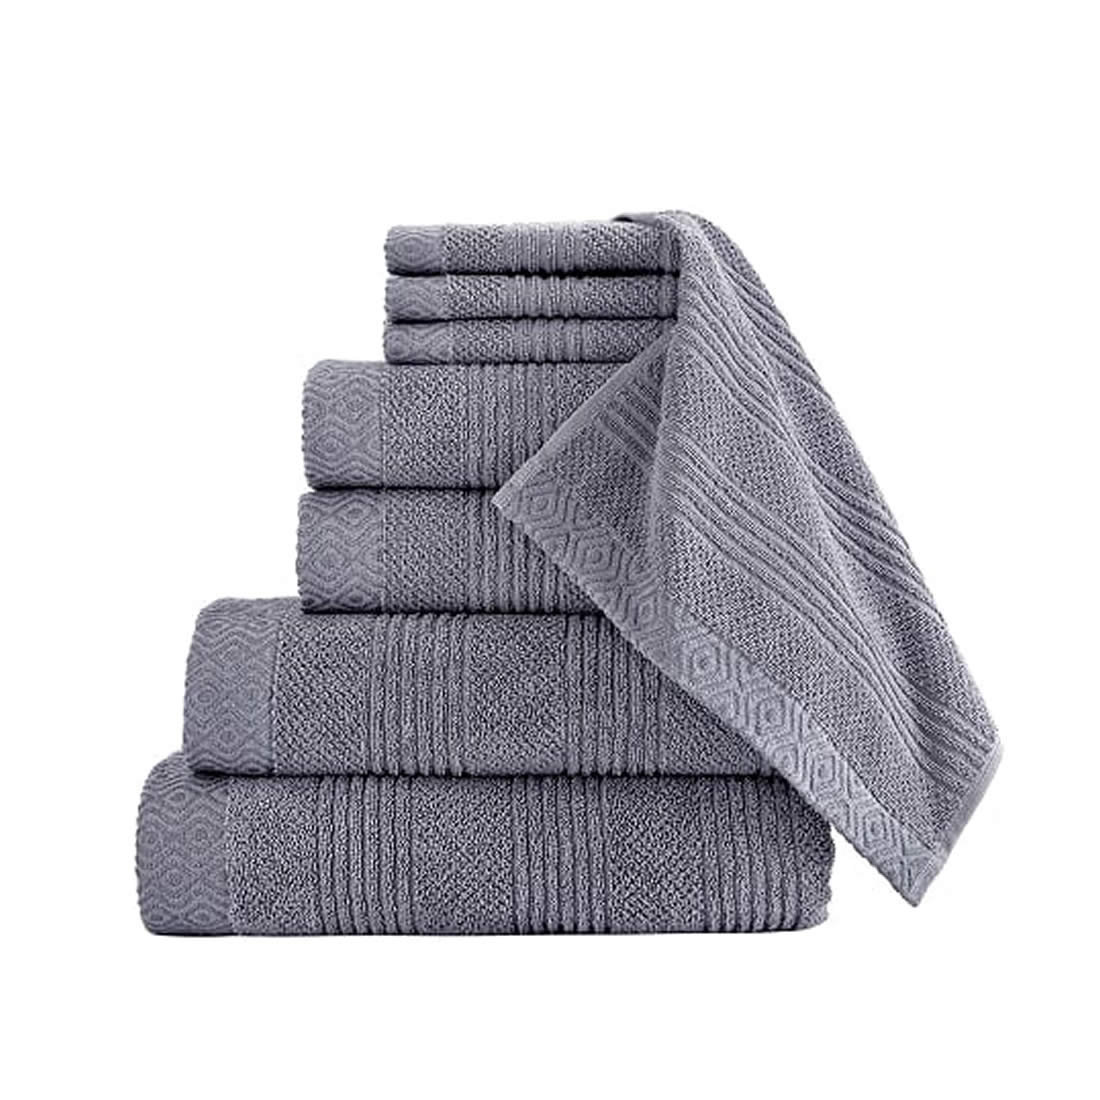 Aqua Luxury Extra Large 8-Piece Turkish Towel Set with 4 Bath Towels 30x60 and 24X48